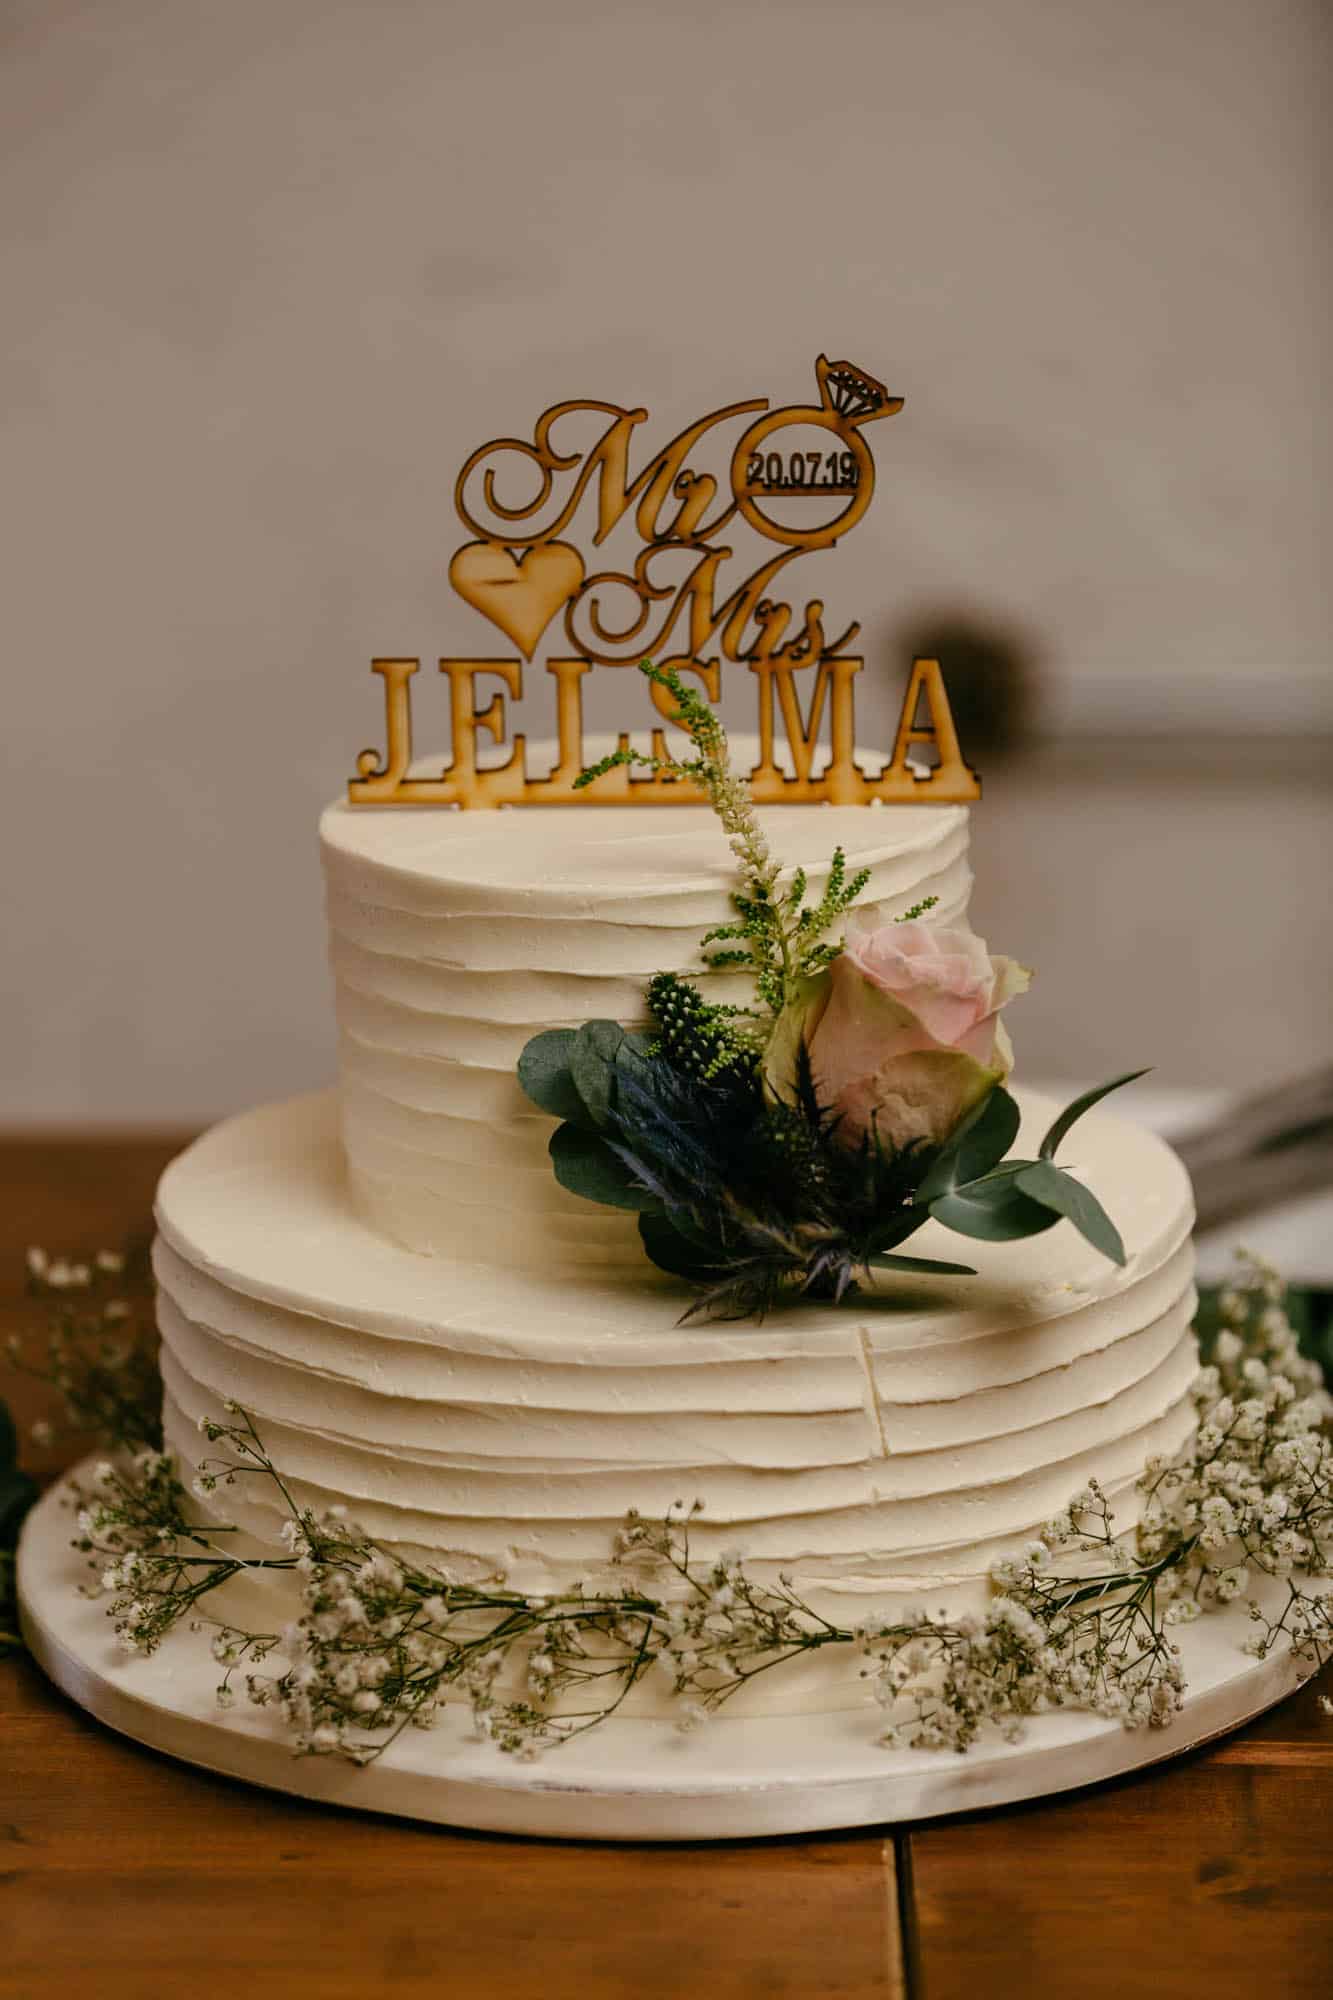 A wedding cake with a wedding cake topper.